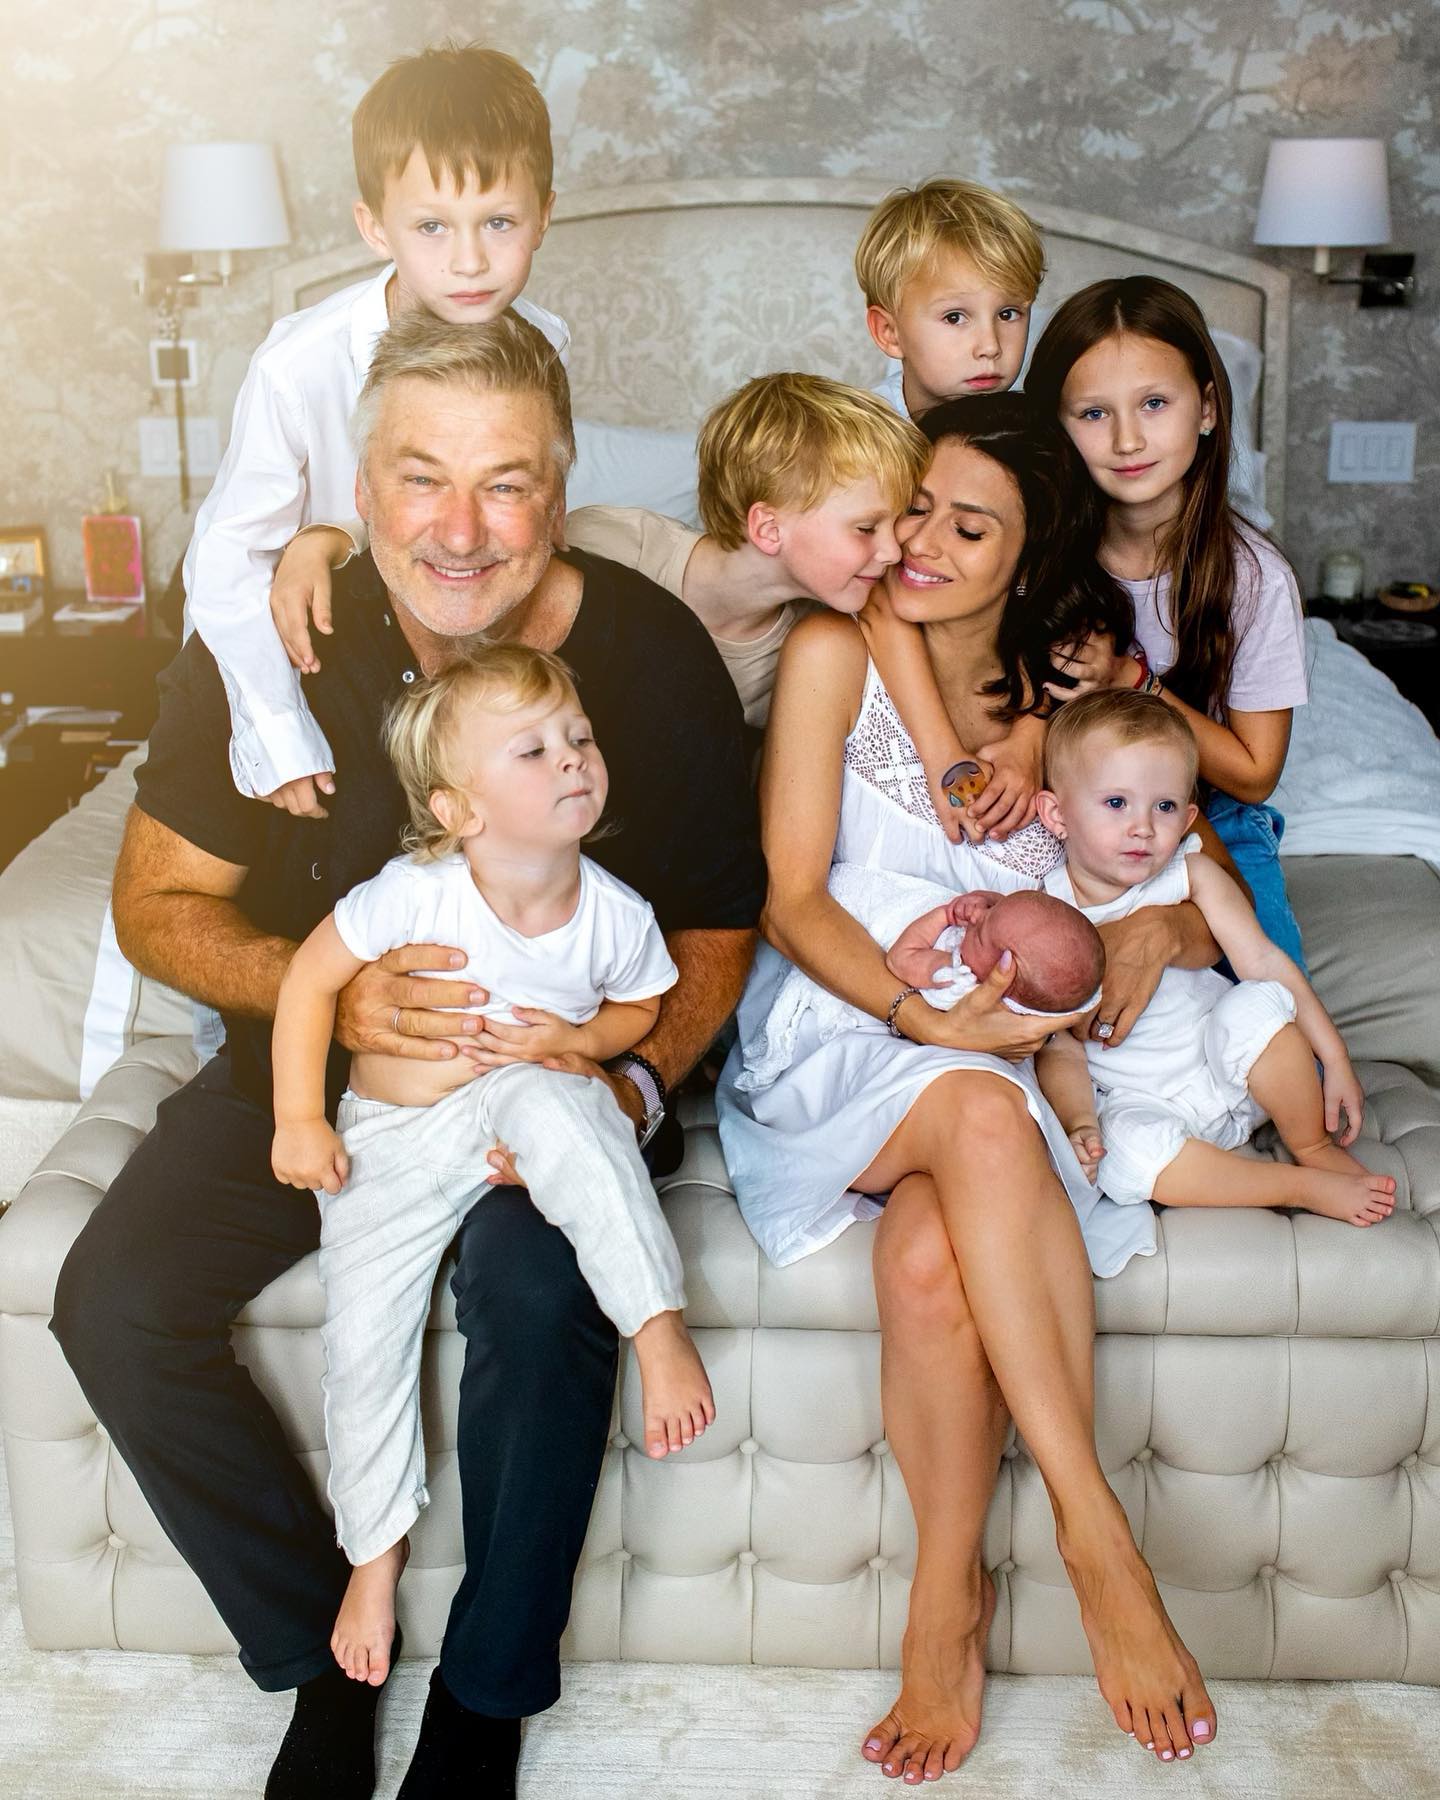 Hilaria Baldwin, Alec Baldwin, and their 7 kids